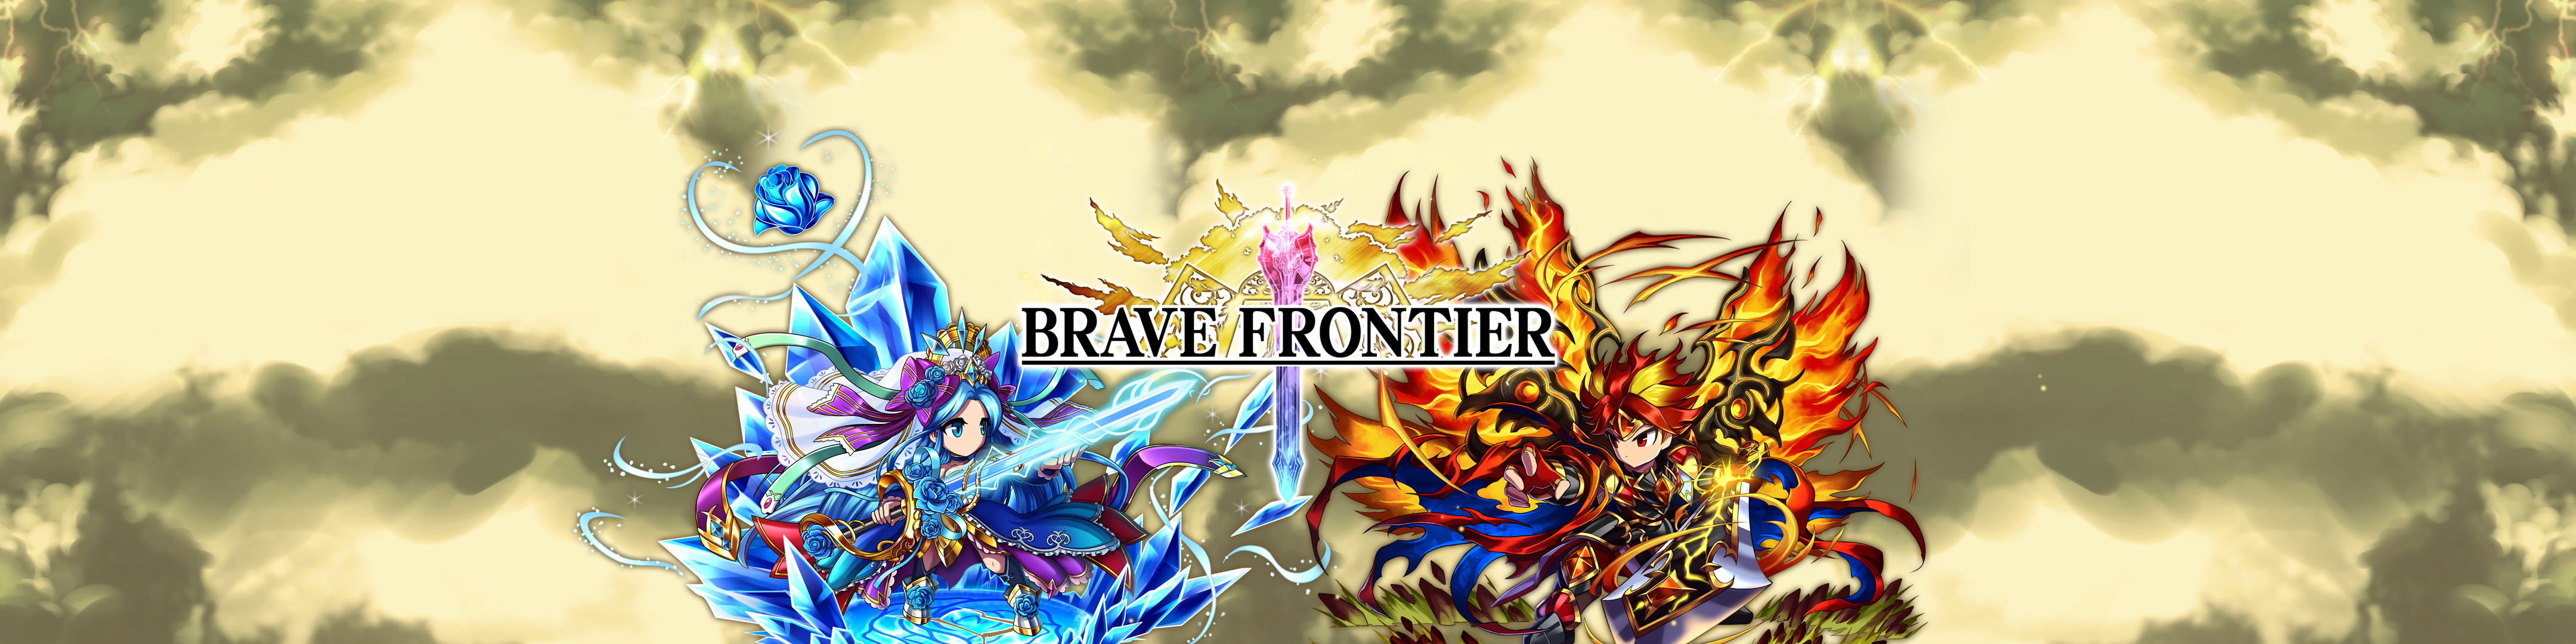 brave frontier 1.1.4